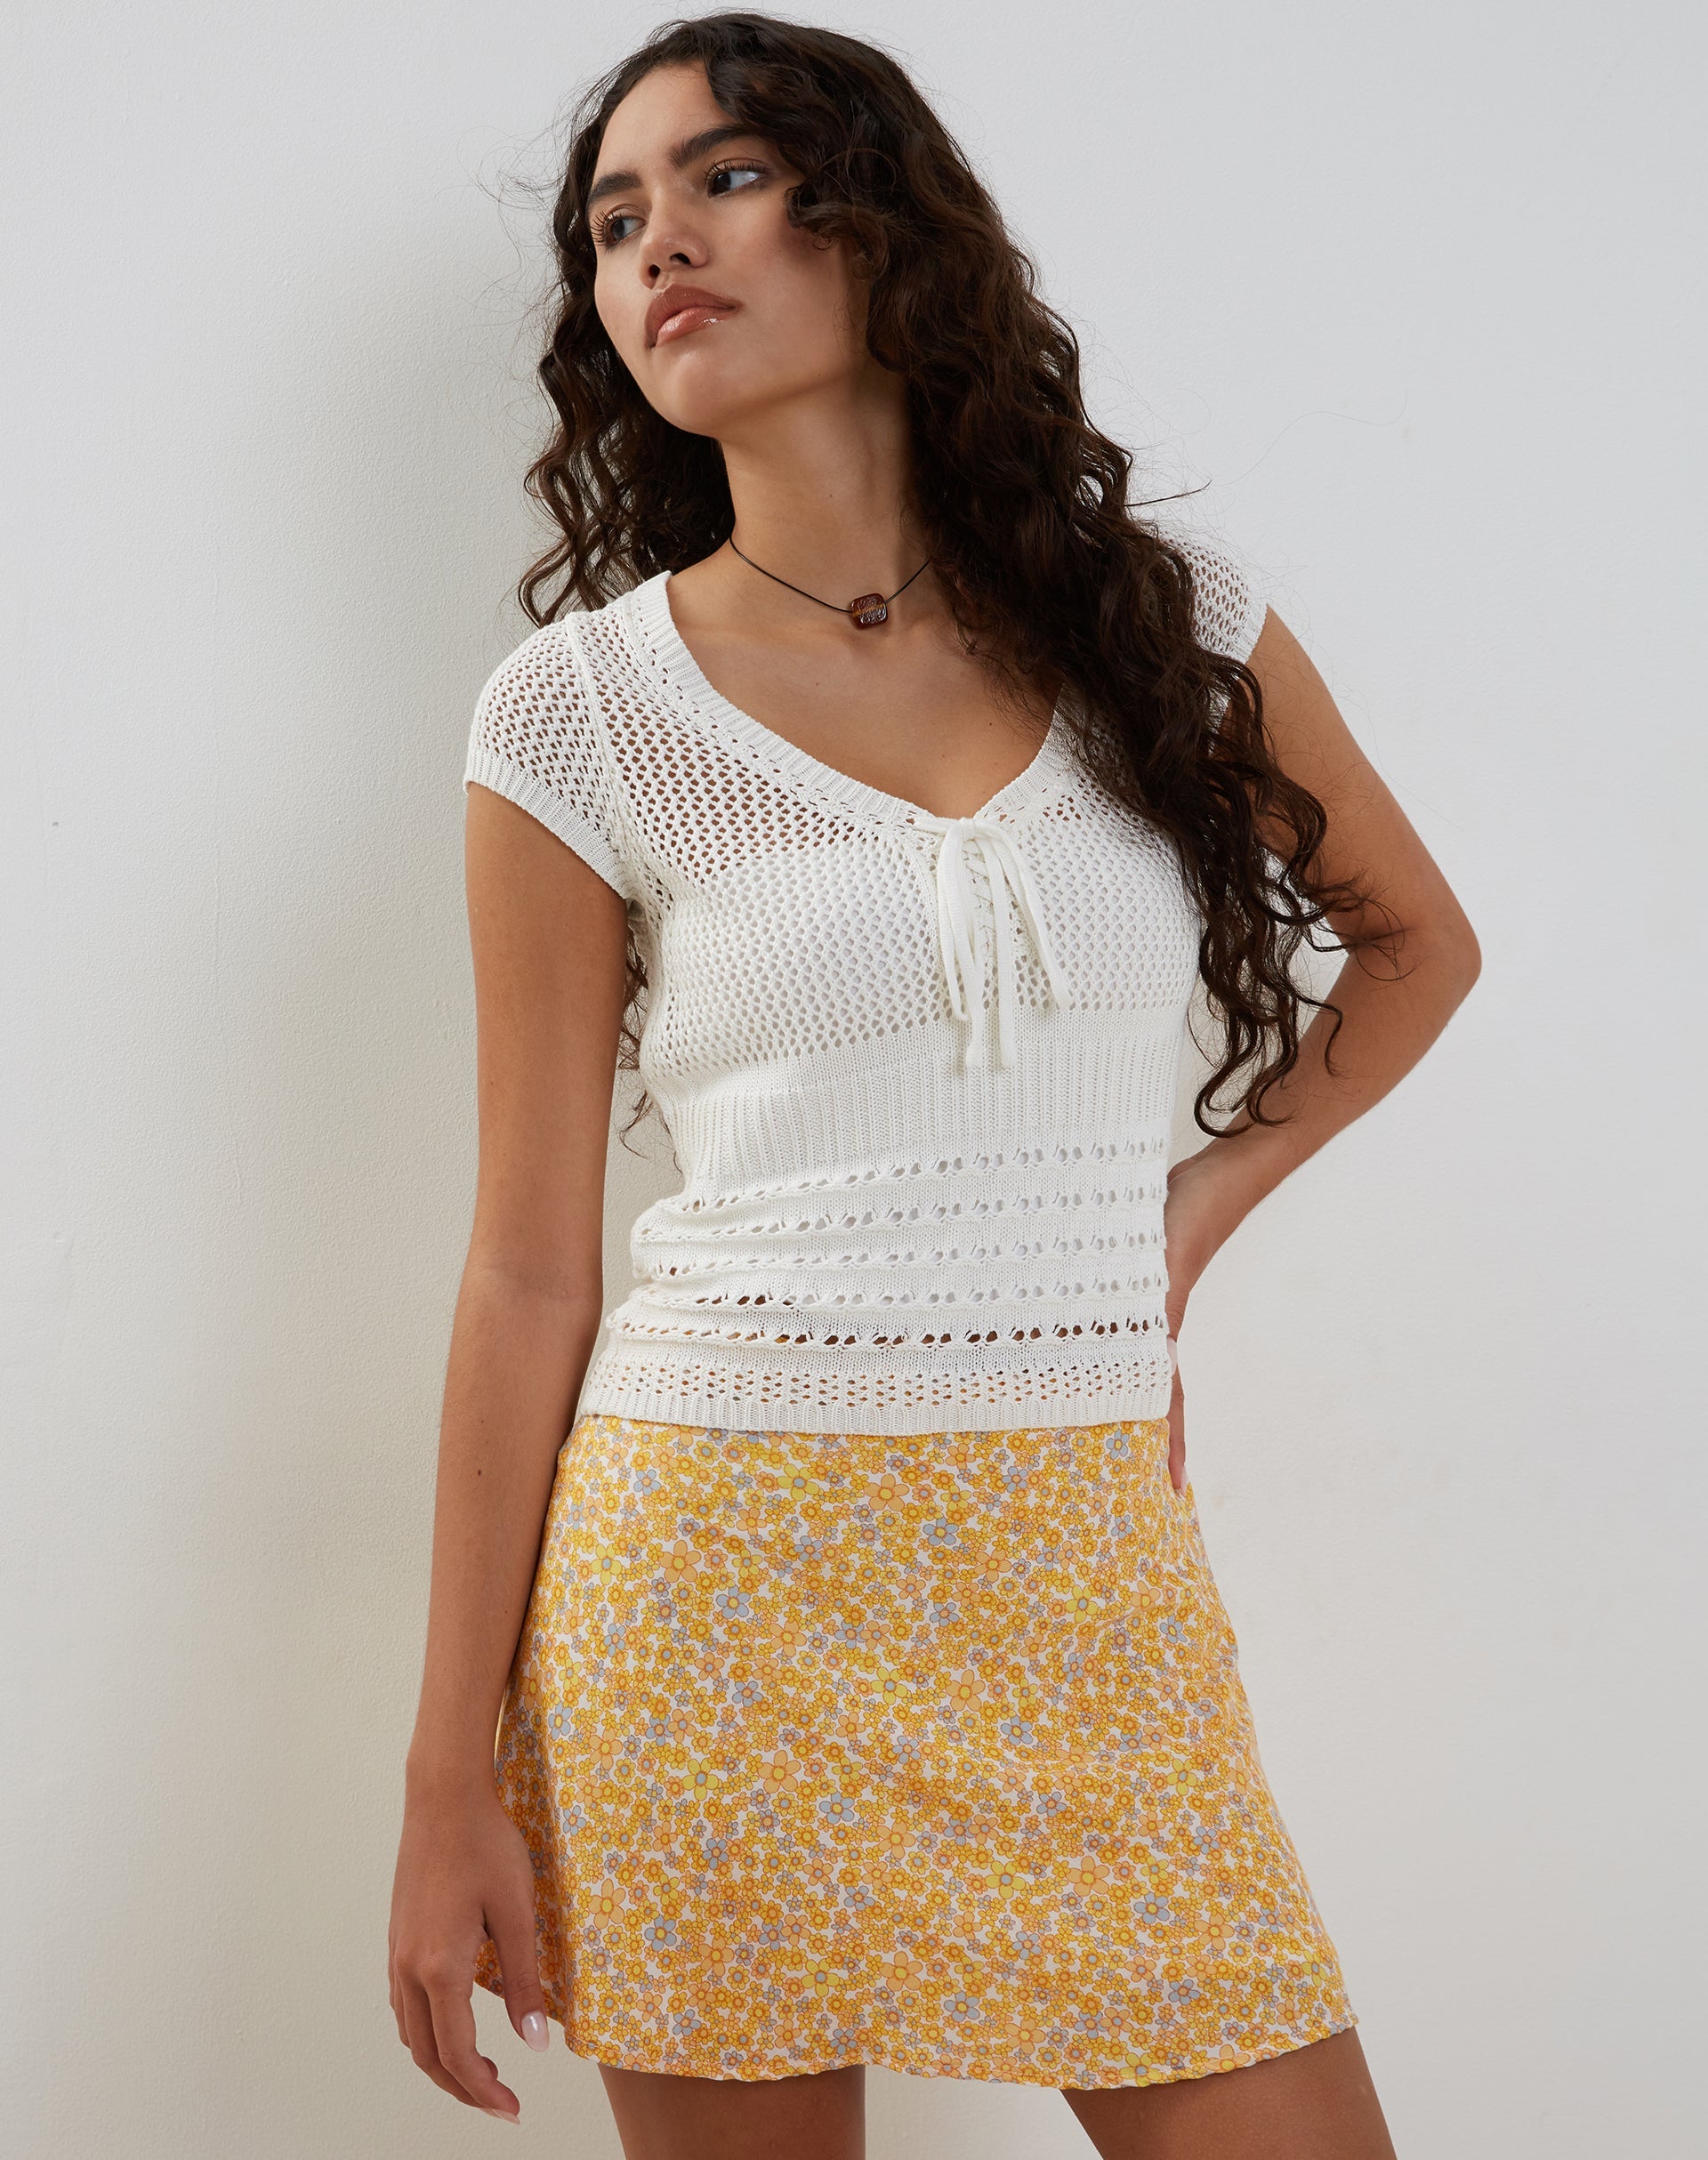 Image of Maurella Mini skirt in Flower Garden Yellow